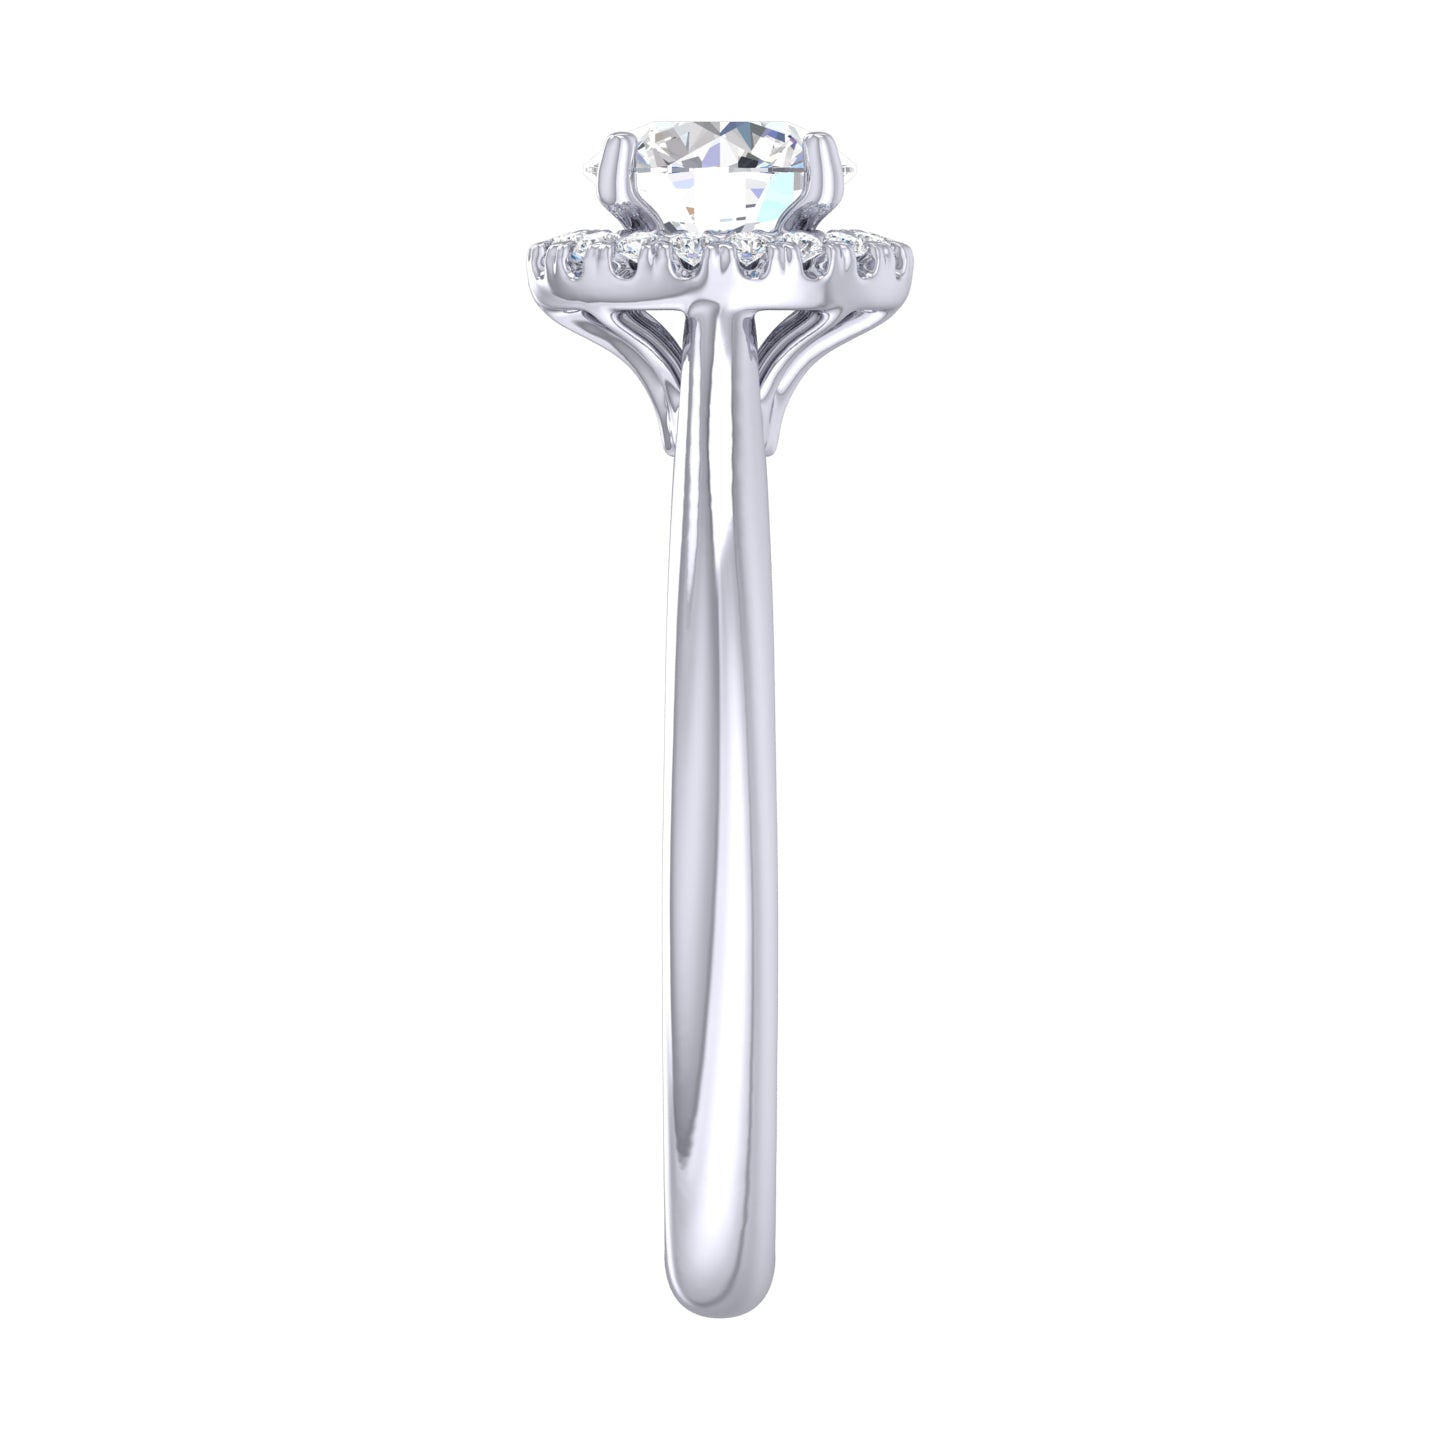 Semi Mount Halo Round Cut Diamond Engagement Ring